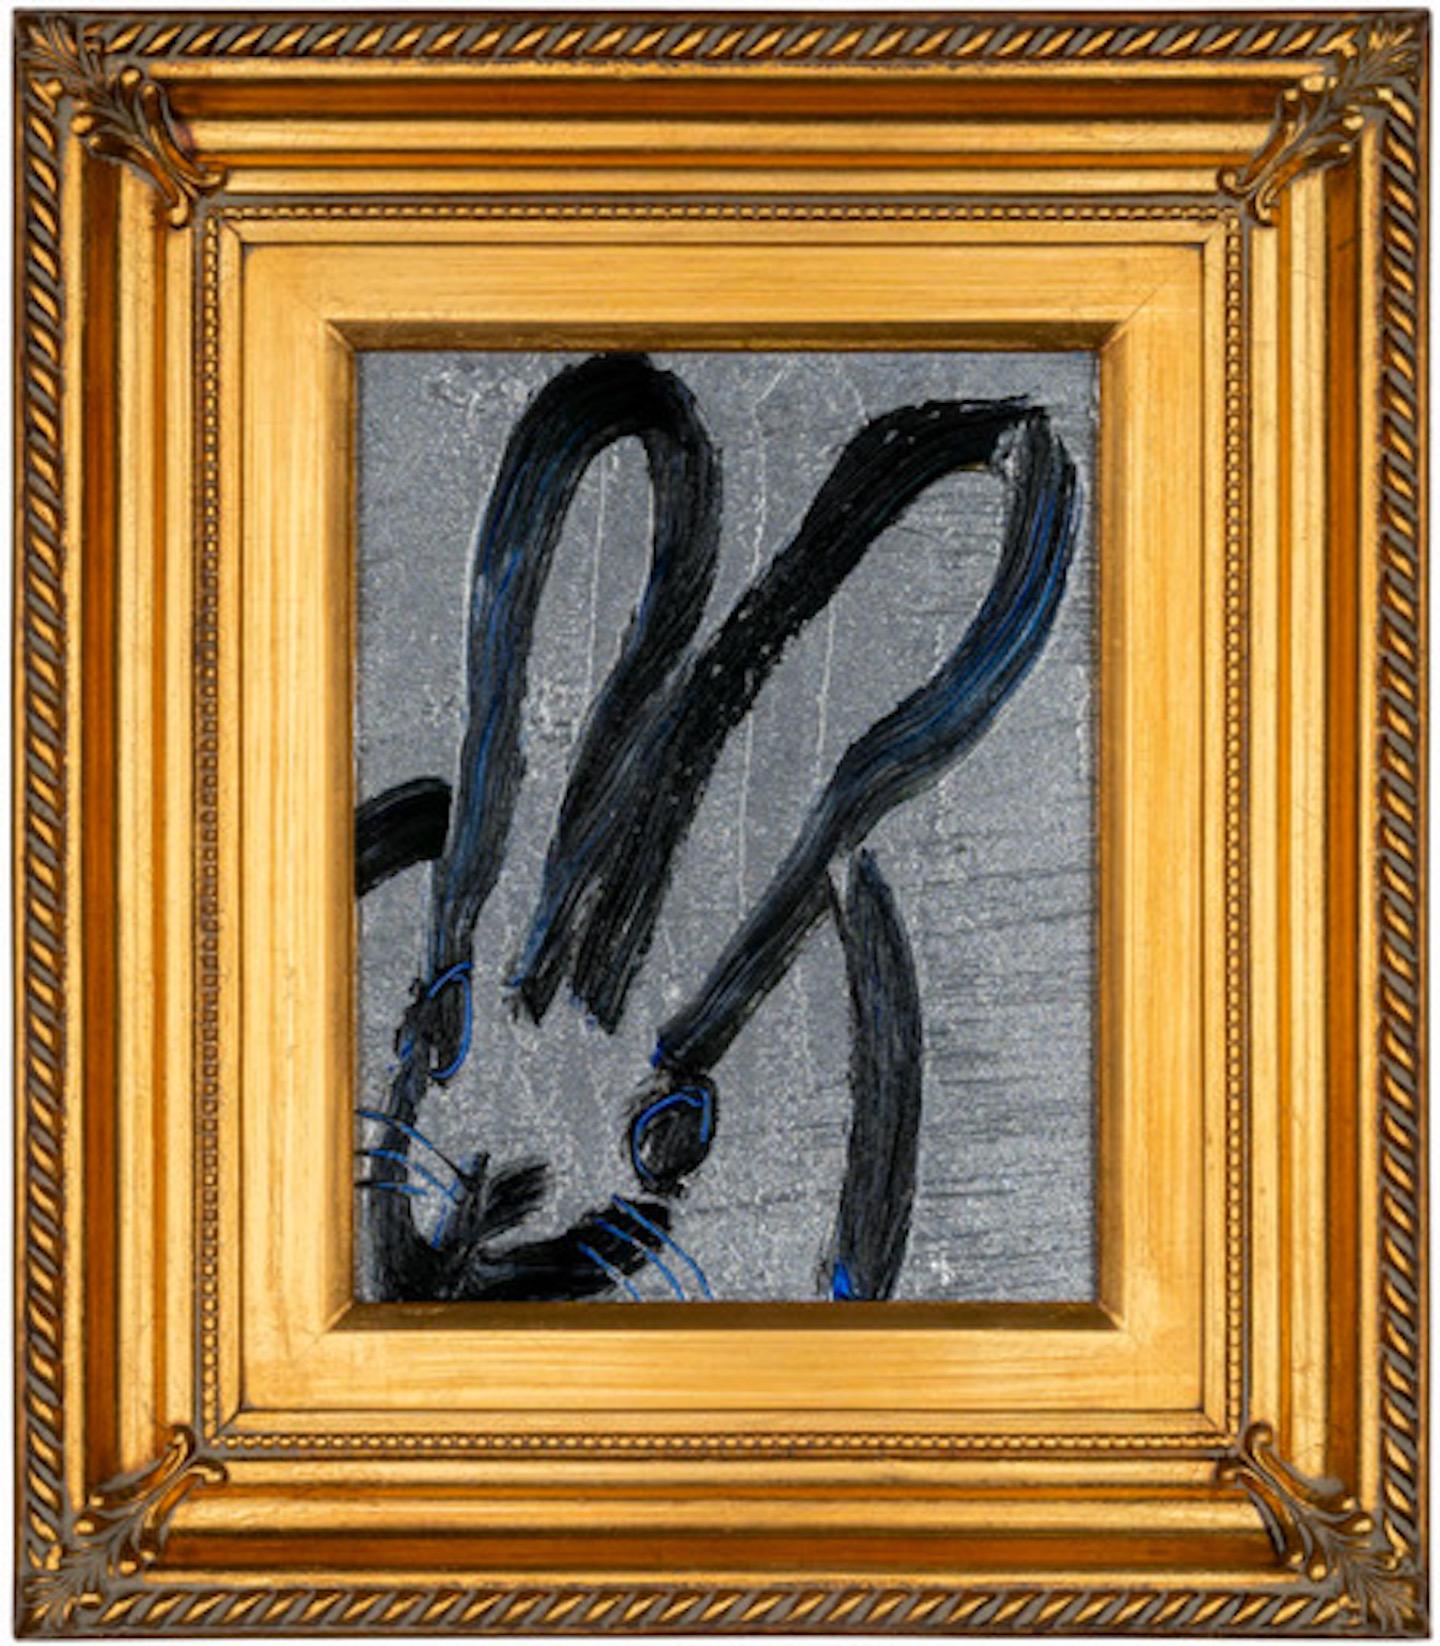 Hunt Slonem Animal Painting - "Silver Streak" Silver and Black Bunny Original Oil painting in Vintage Frame